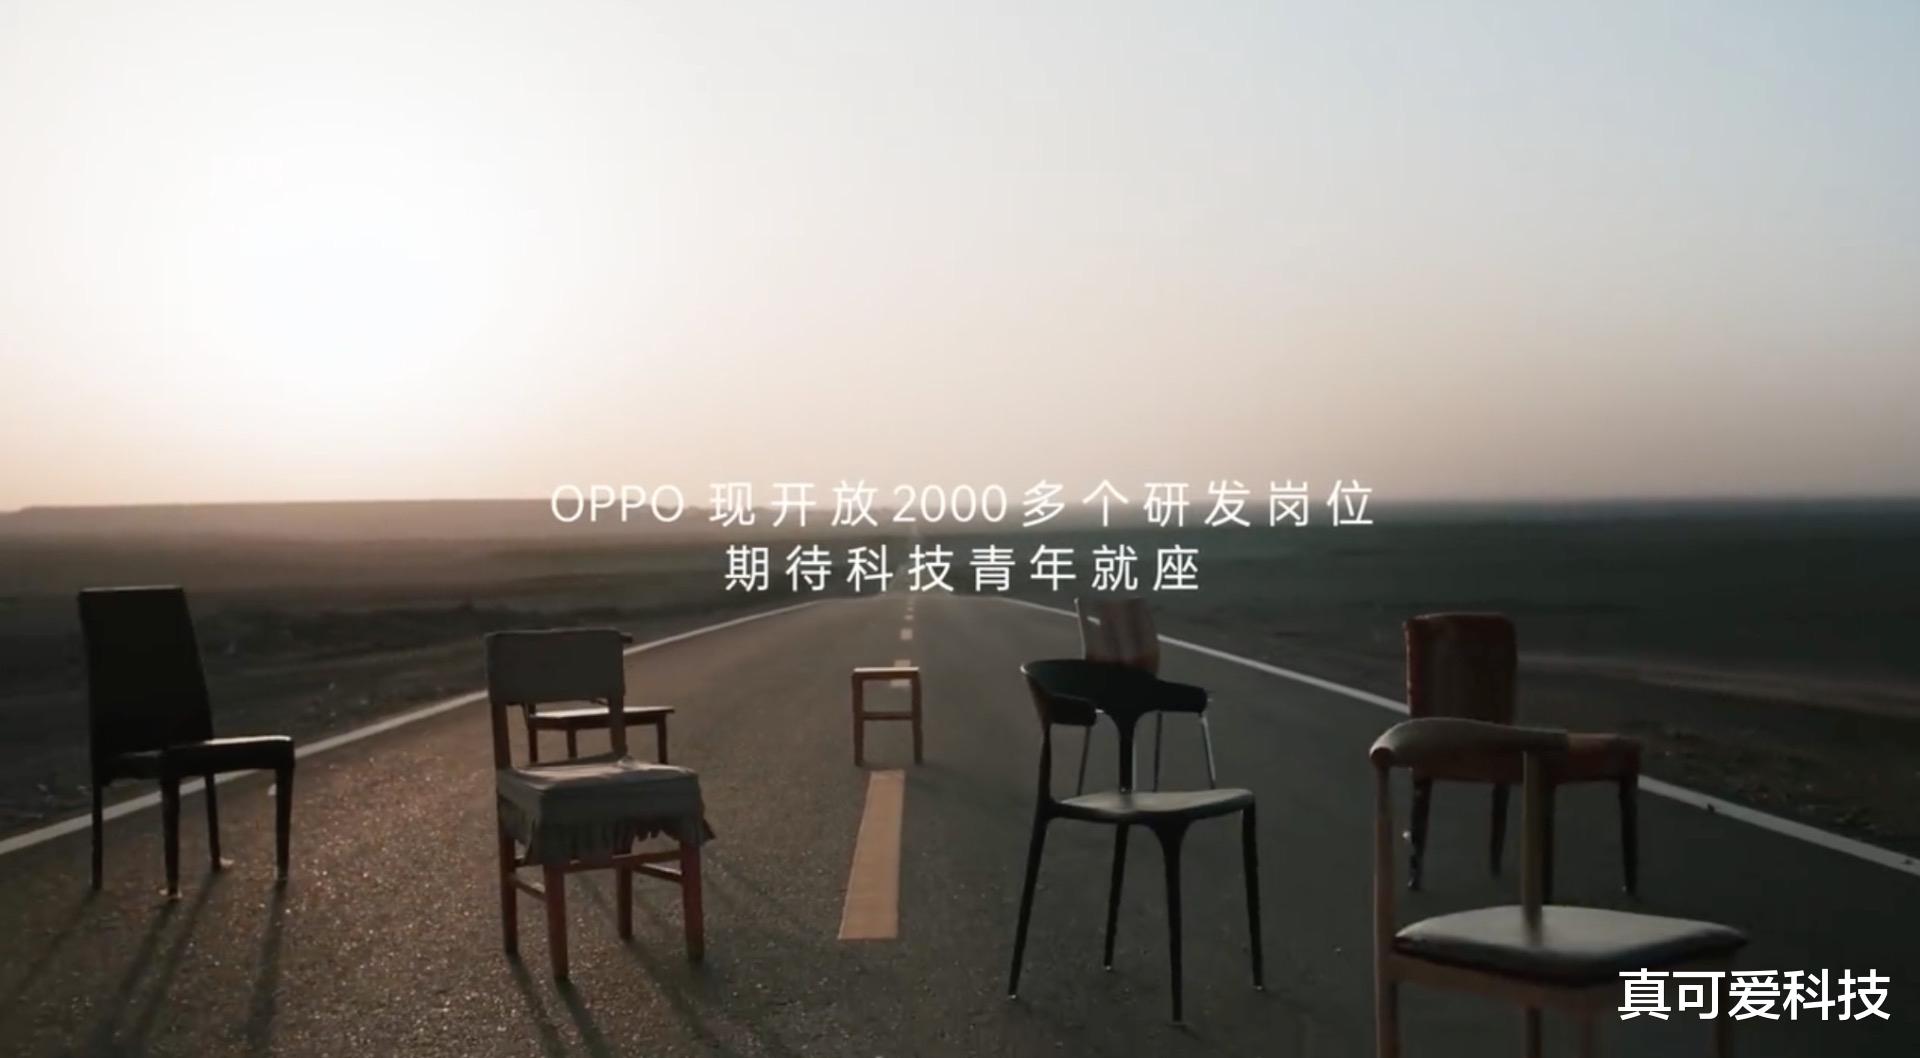 OPPO高管分享新时代板凳精神，加码技术研发布局，赋能人才发展